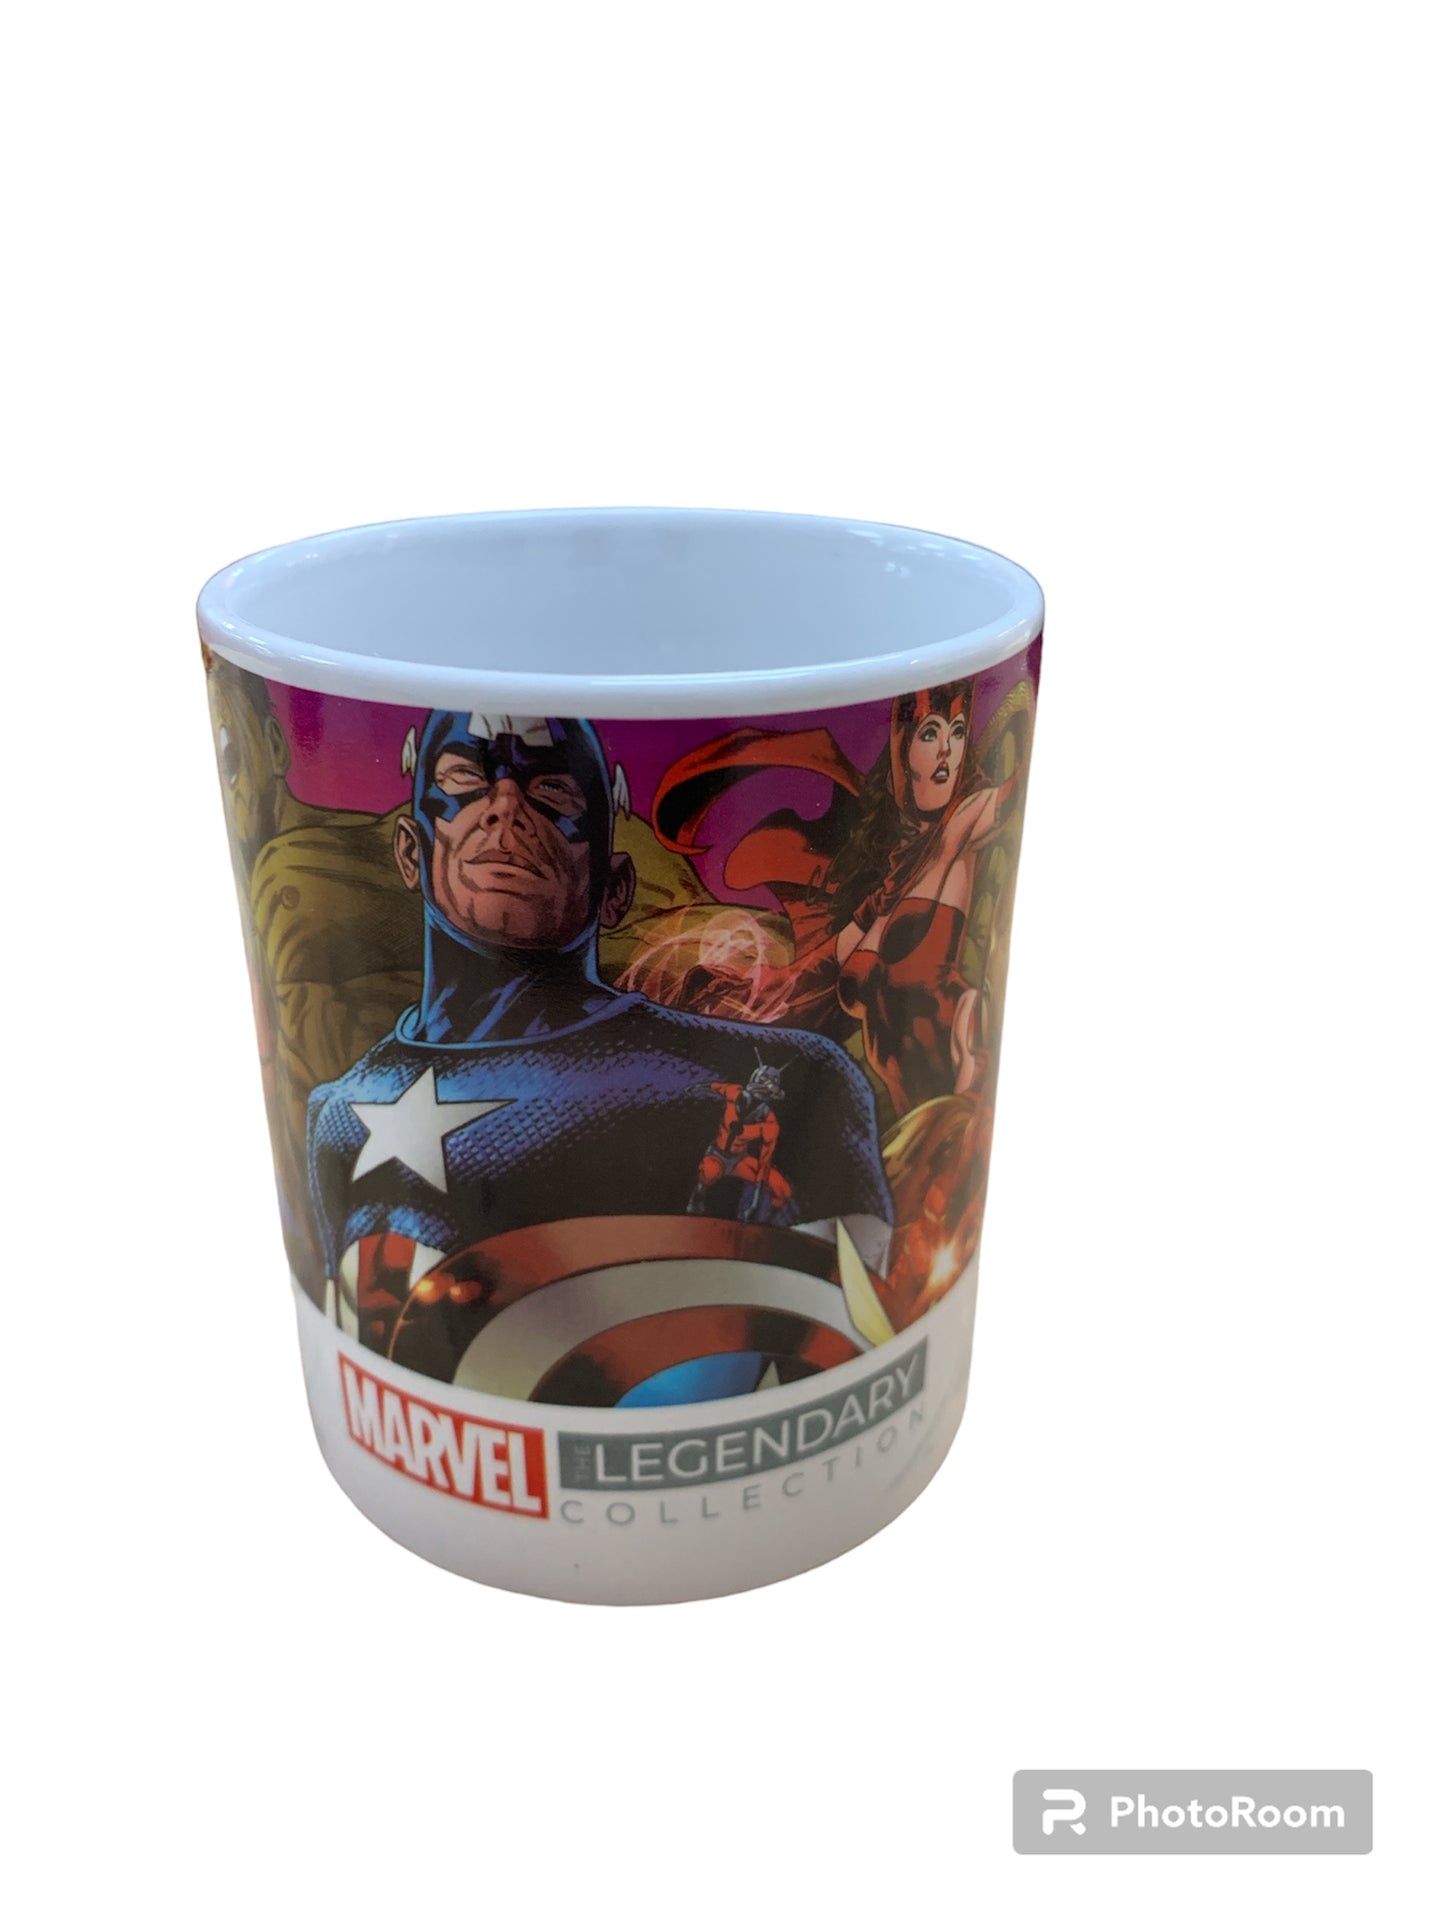 Marvel legendary collection mug